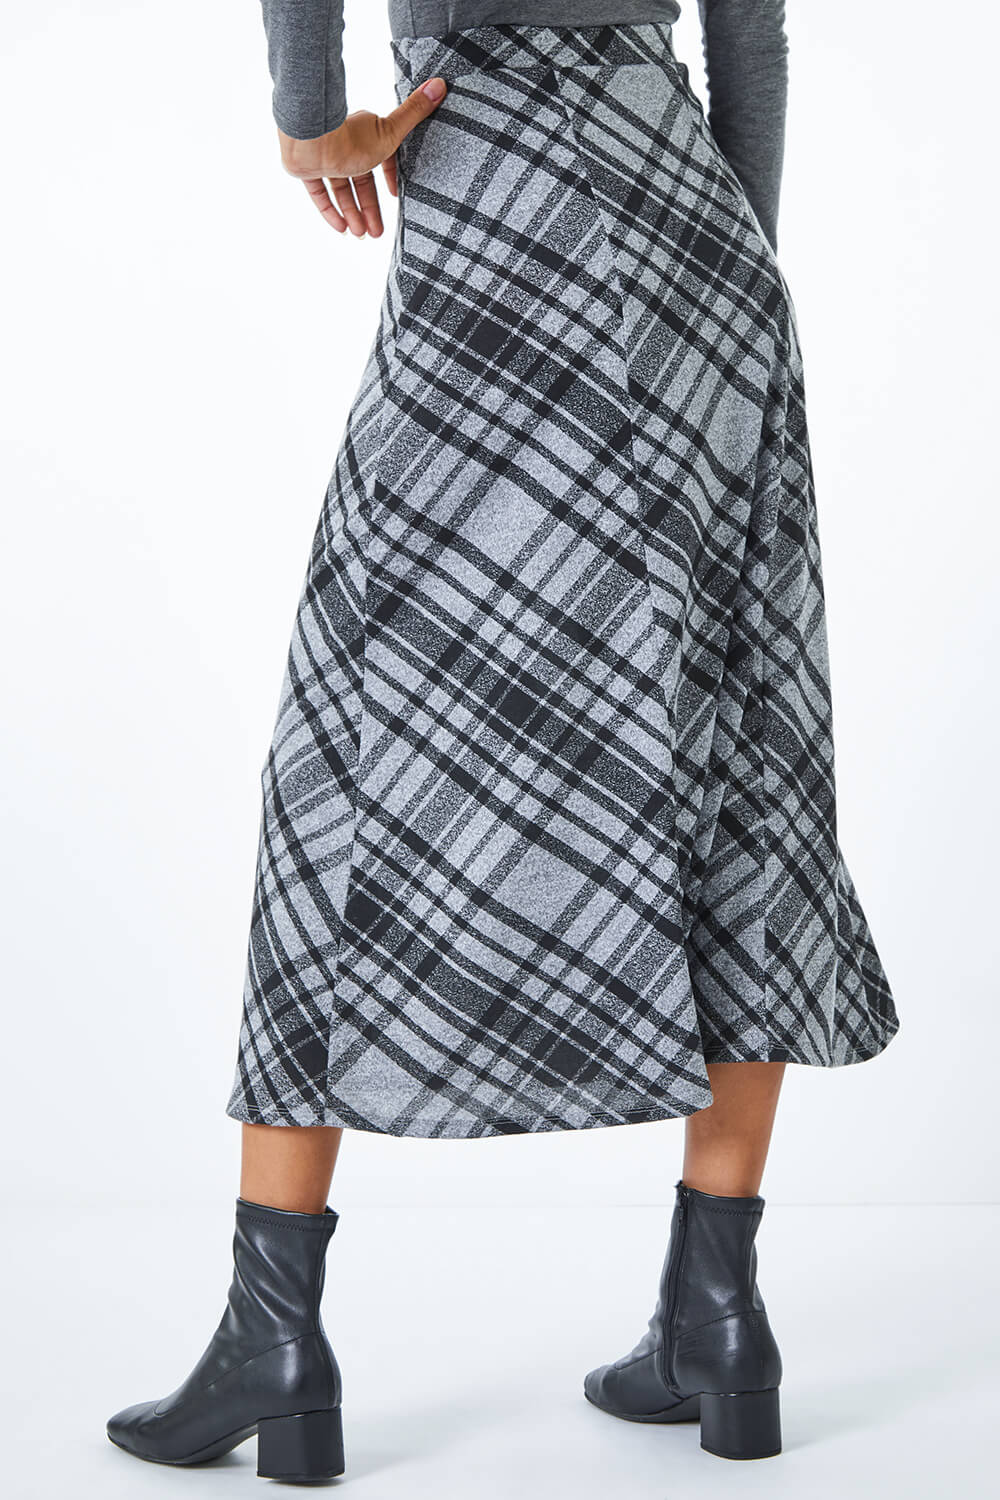 Grey Check Print Stretch Skirt, Image 2 of 5